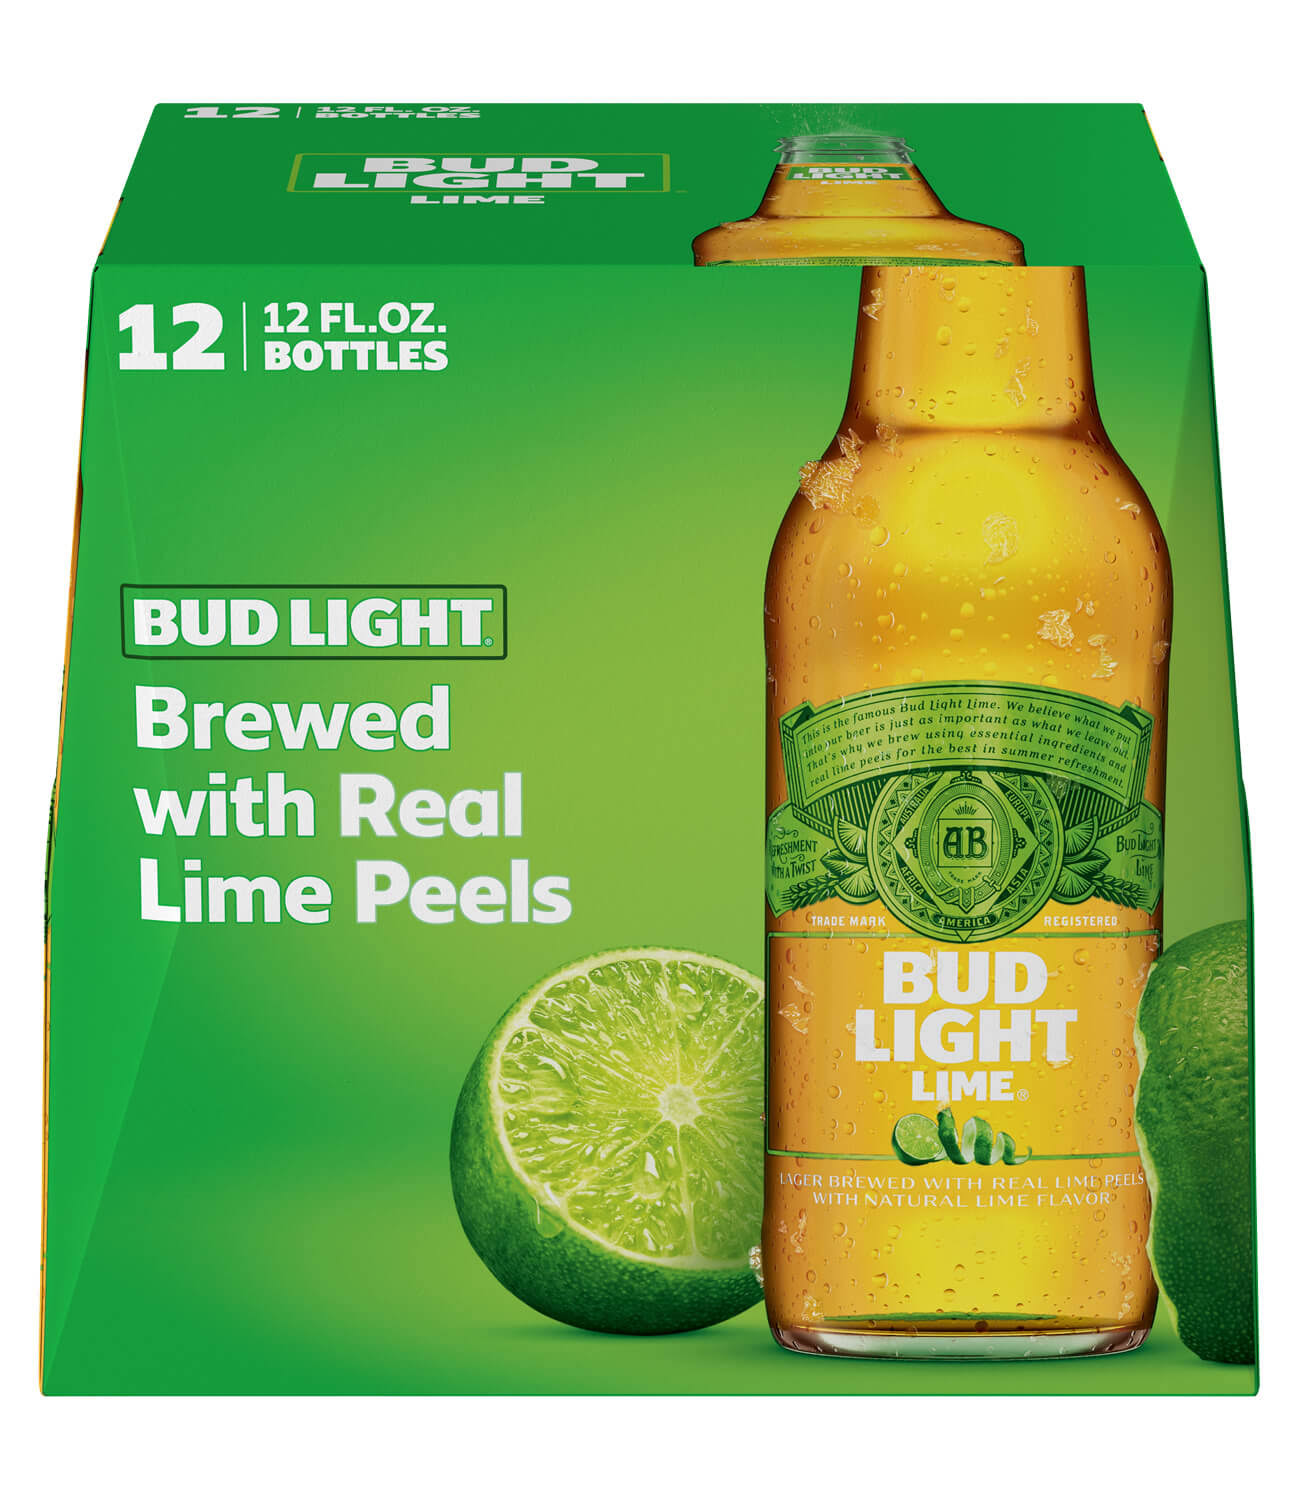 Bud Light Lime Beer